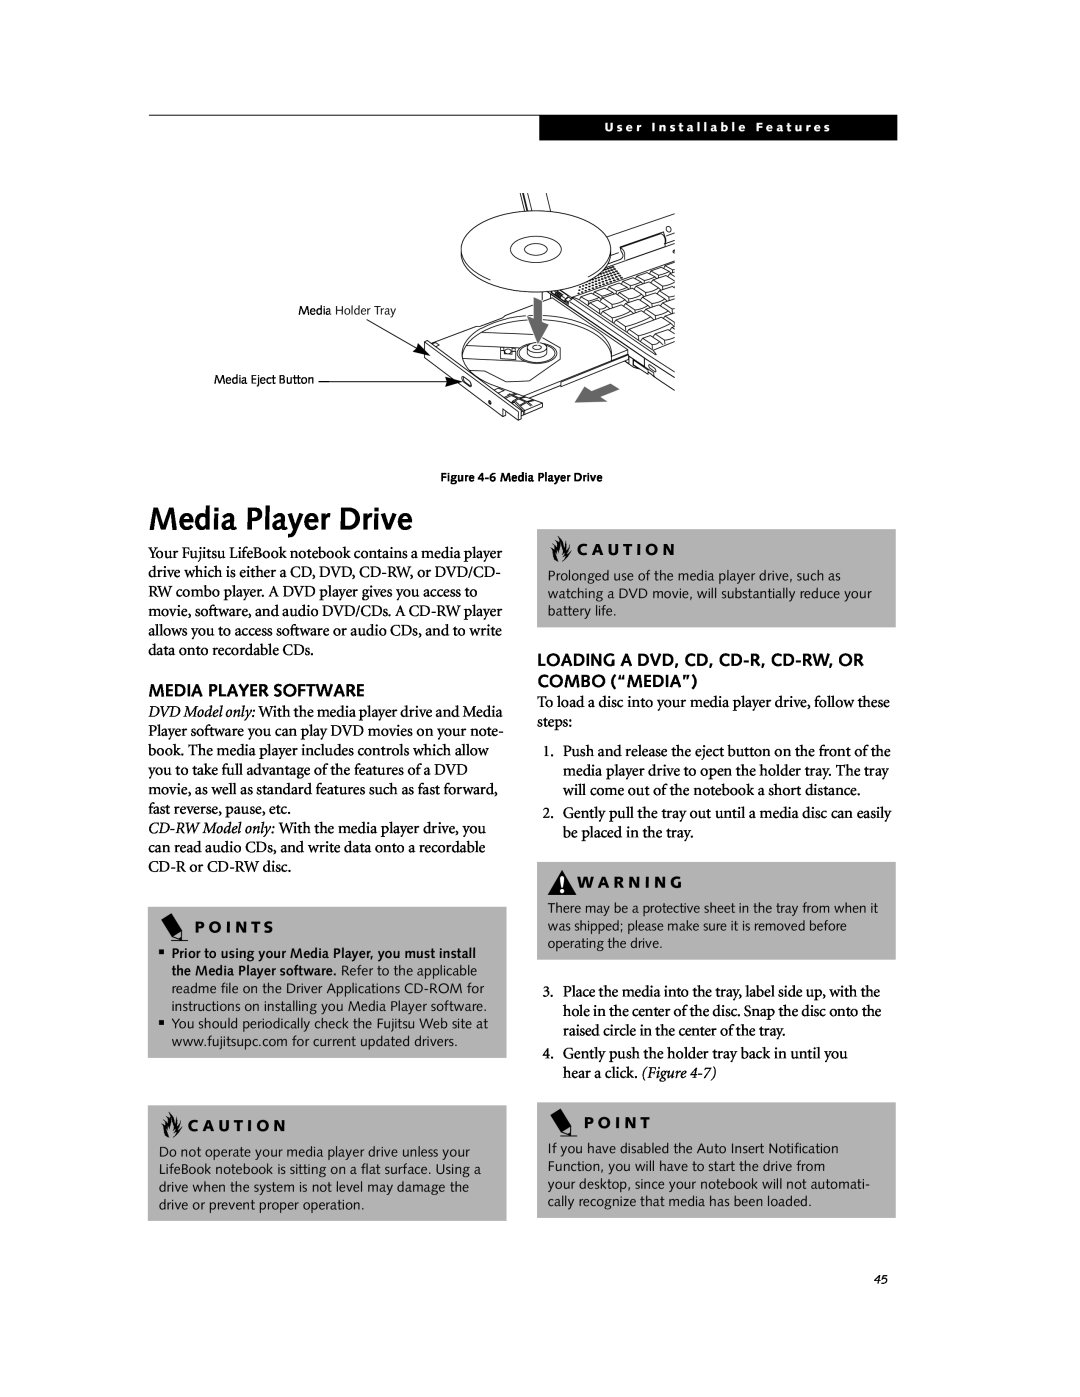 Fujitsu DVD Player Media Player Drive, Media Player Software, Loading A Dvd, Cd, Cd-R, Cd-Rw, Or Combo “Media”, P O I N T 